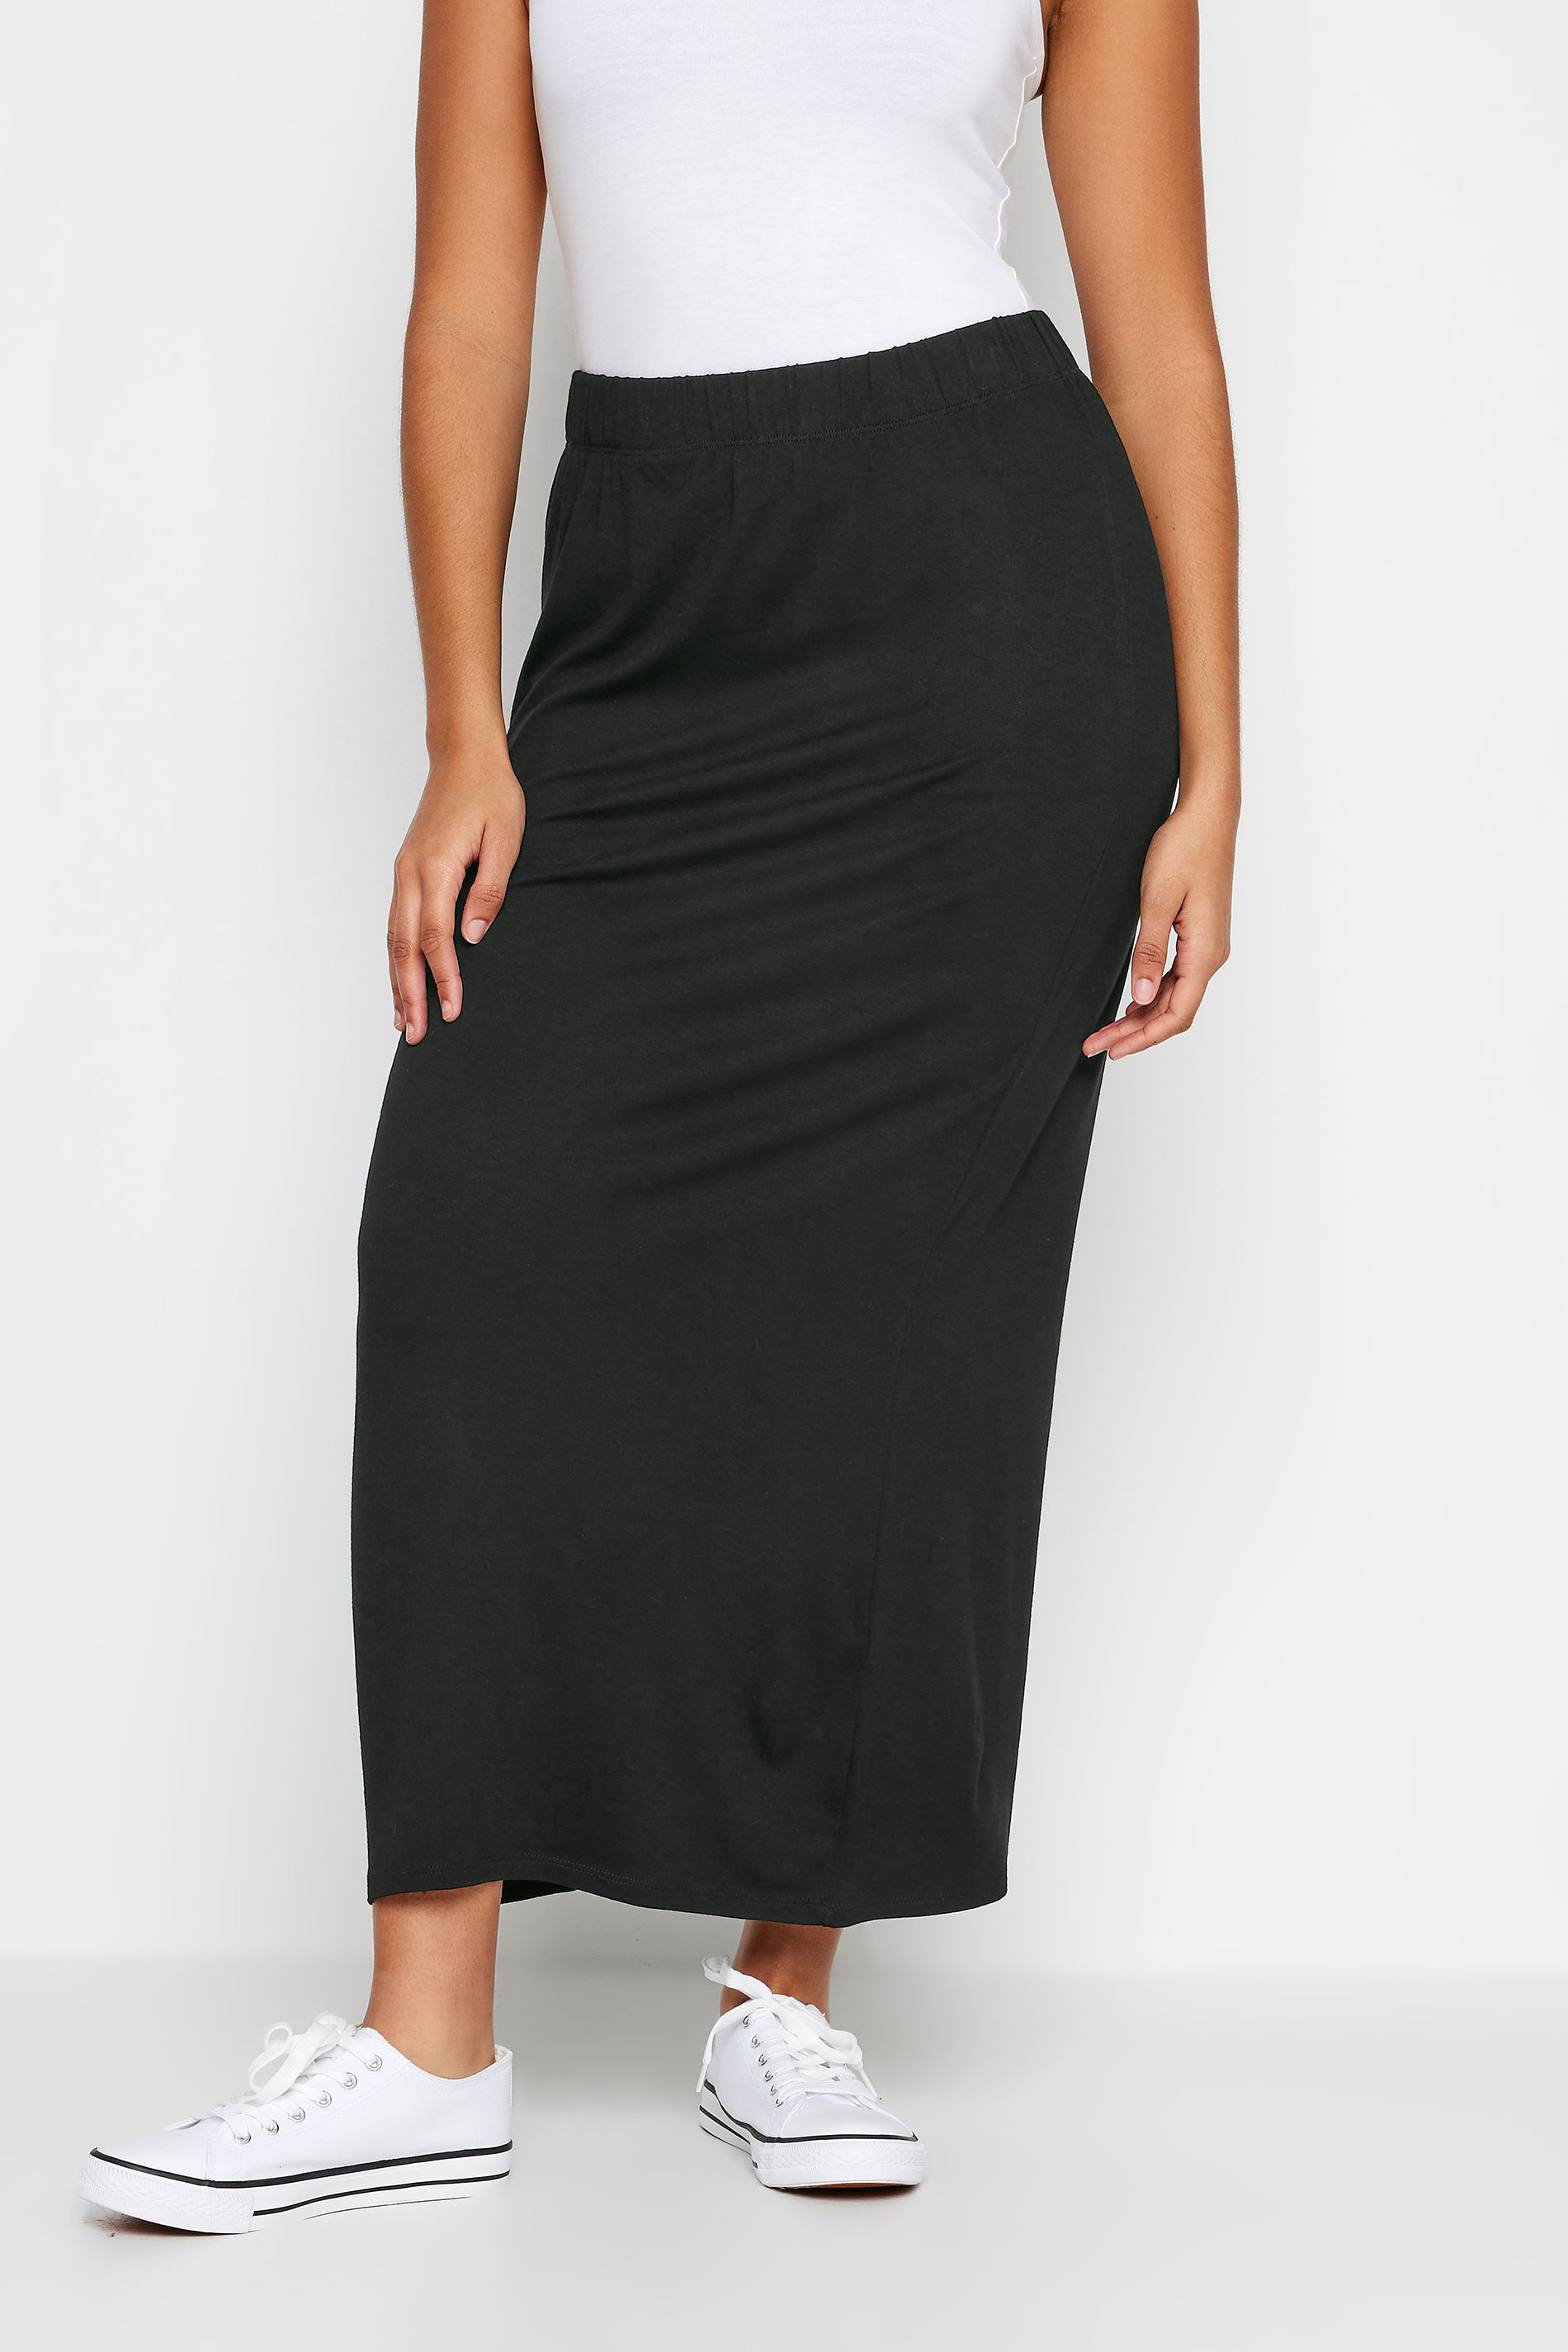 M&Co Black Tube Maxi Skirt | M&Co 1